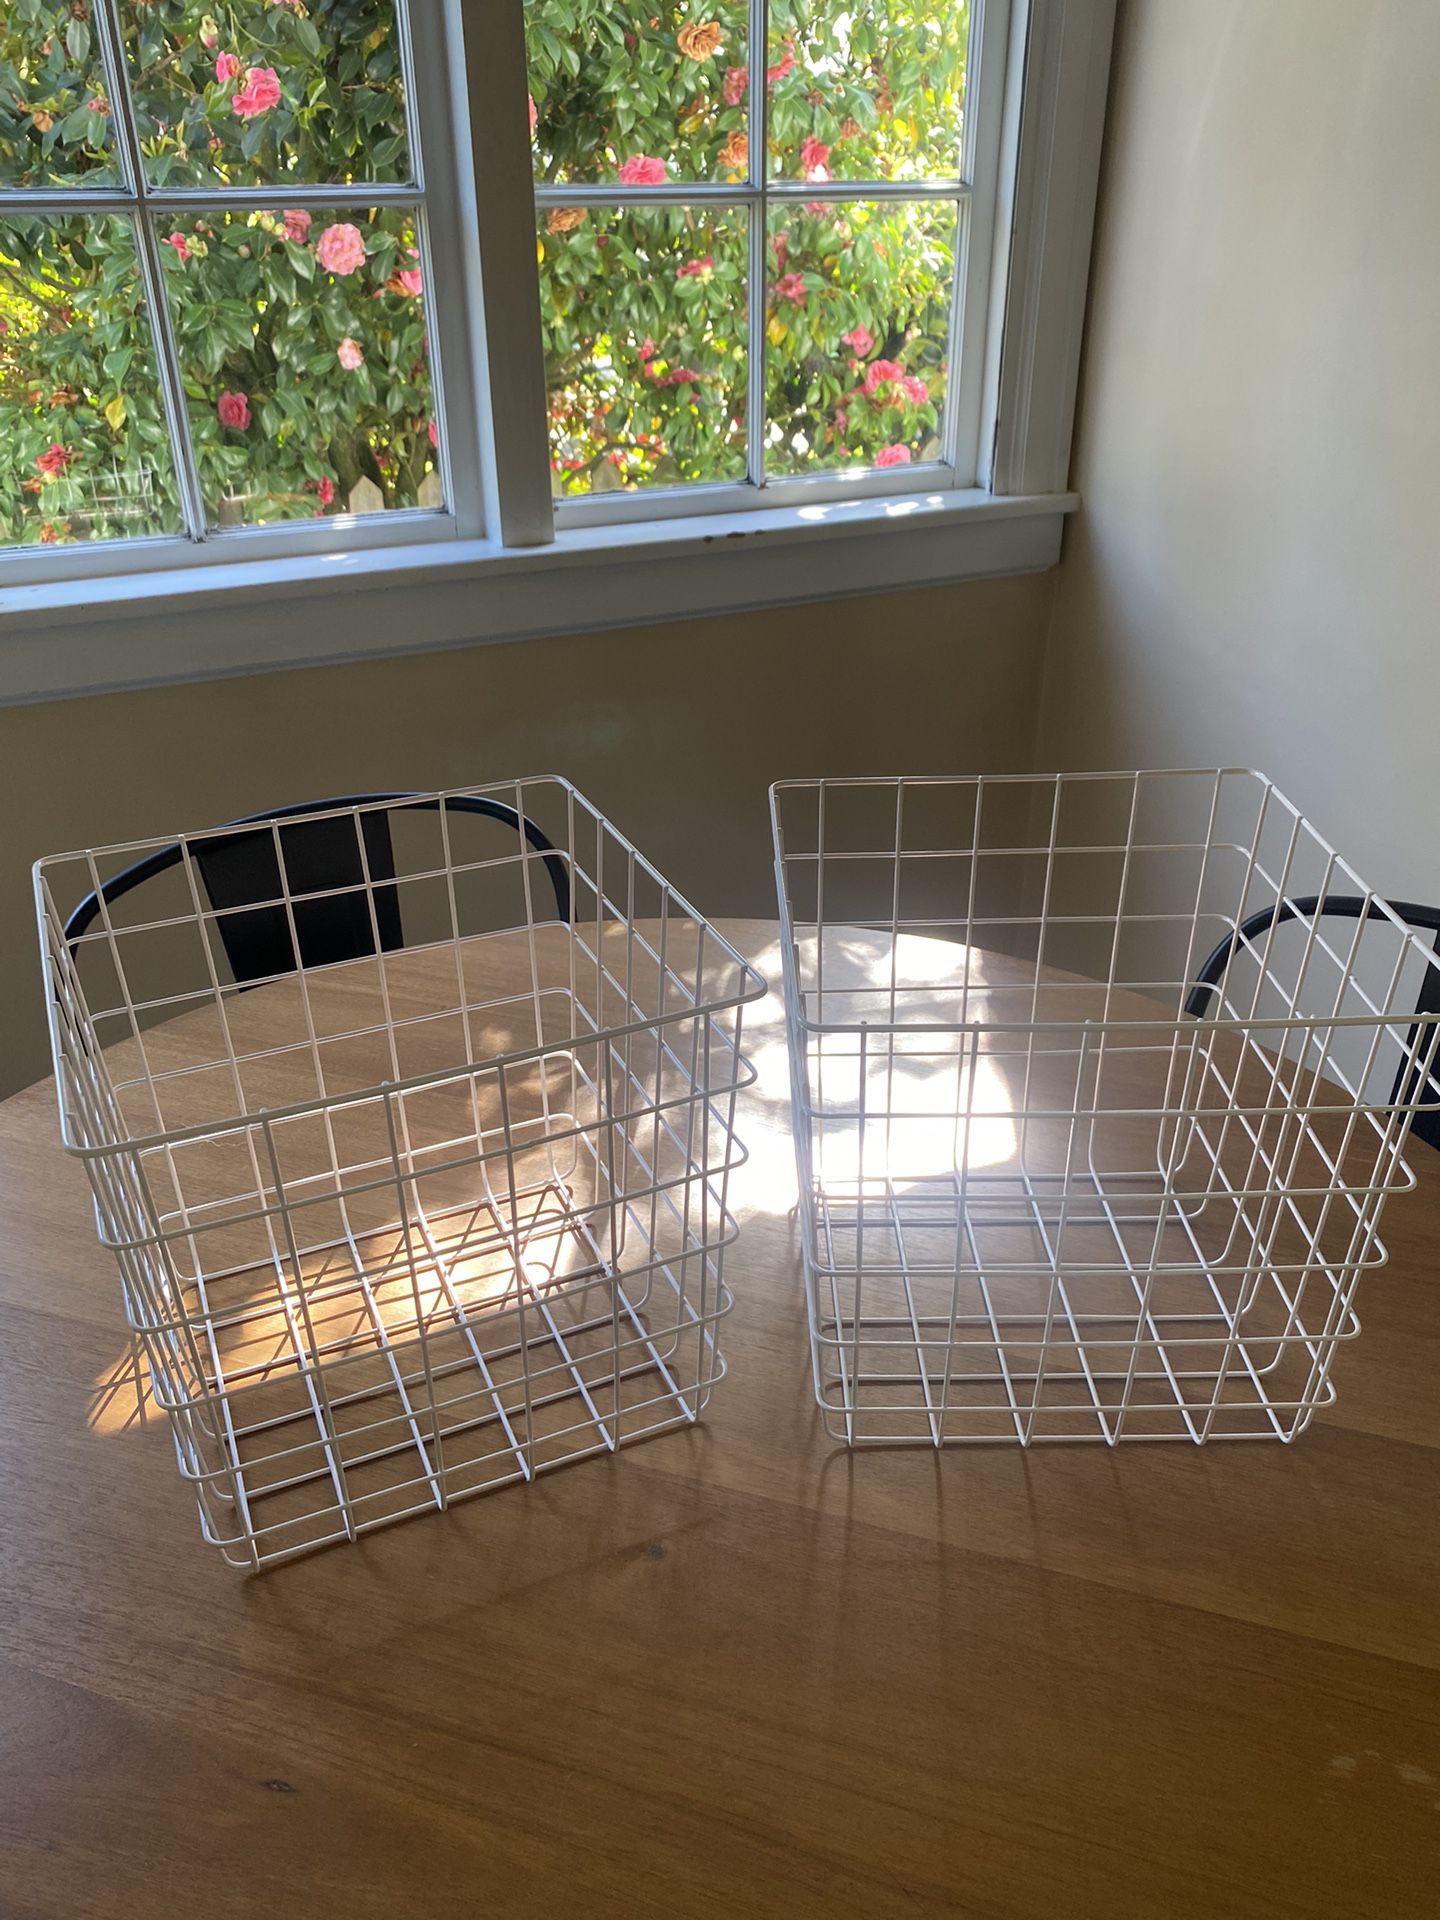 2 metal Baskets